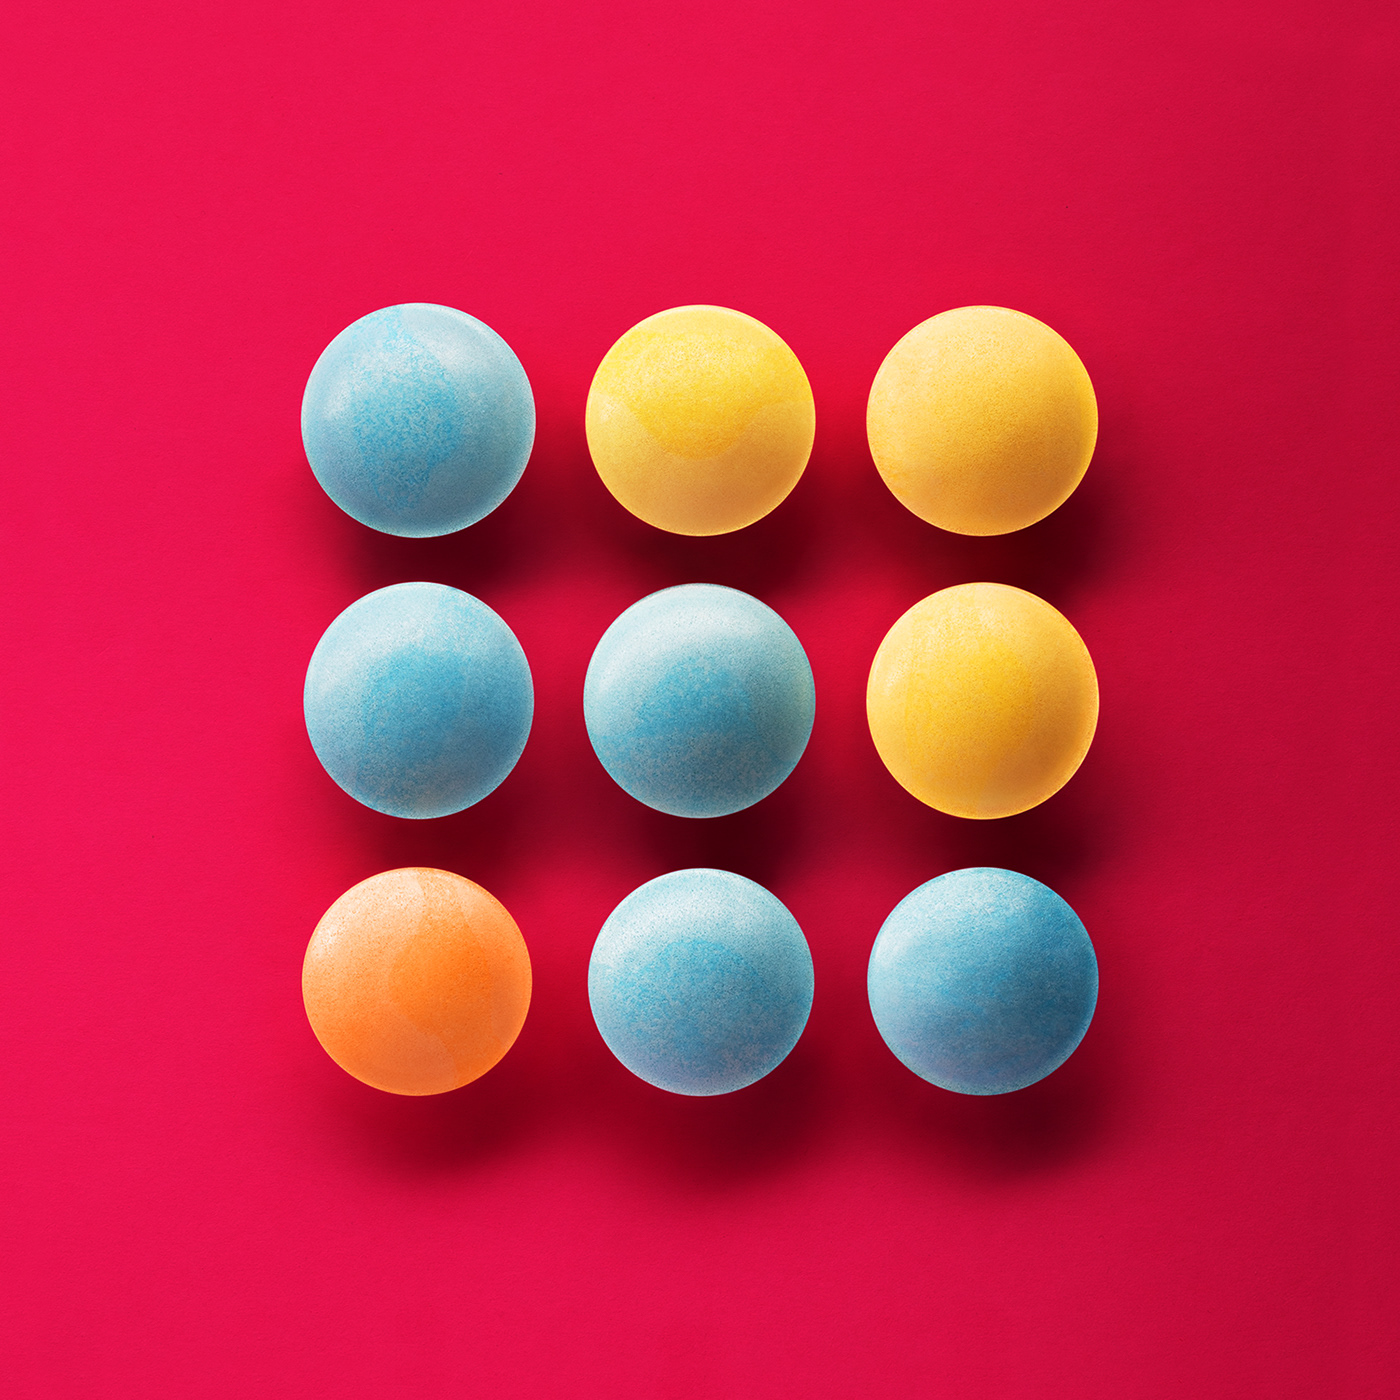 Sweets happiness colours colors art Candy joy Pleasure structures geometry Pop Art